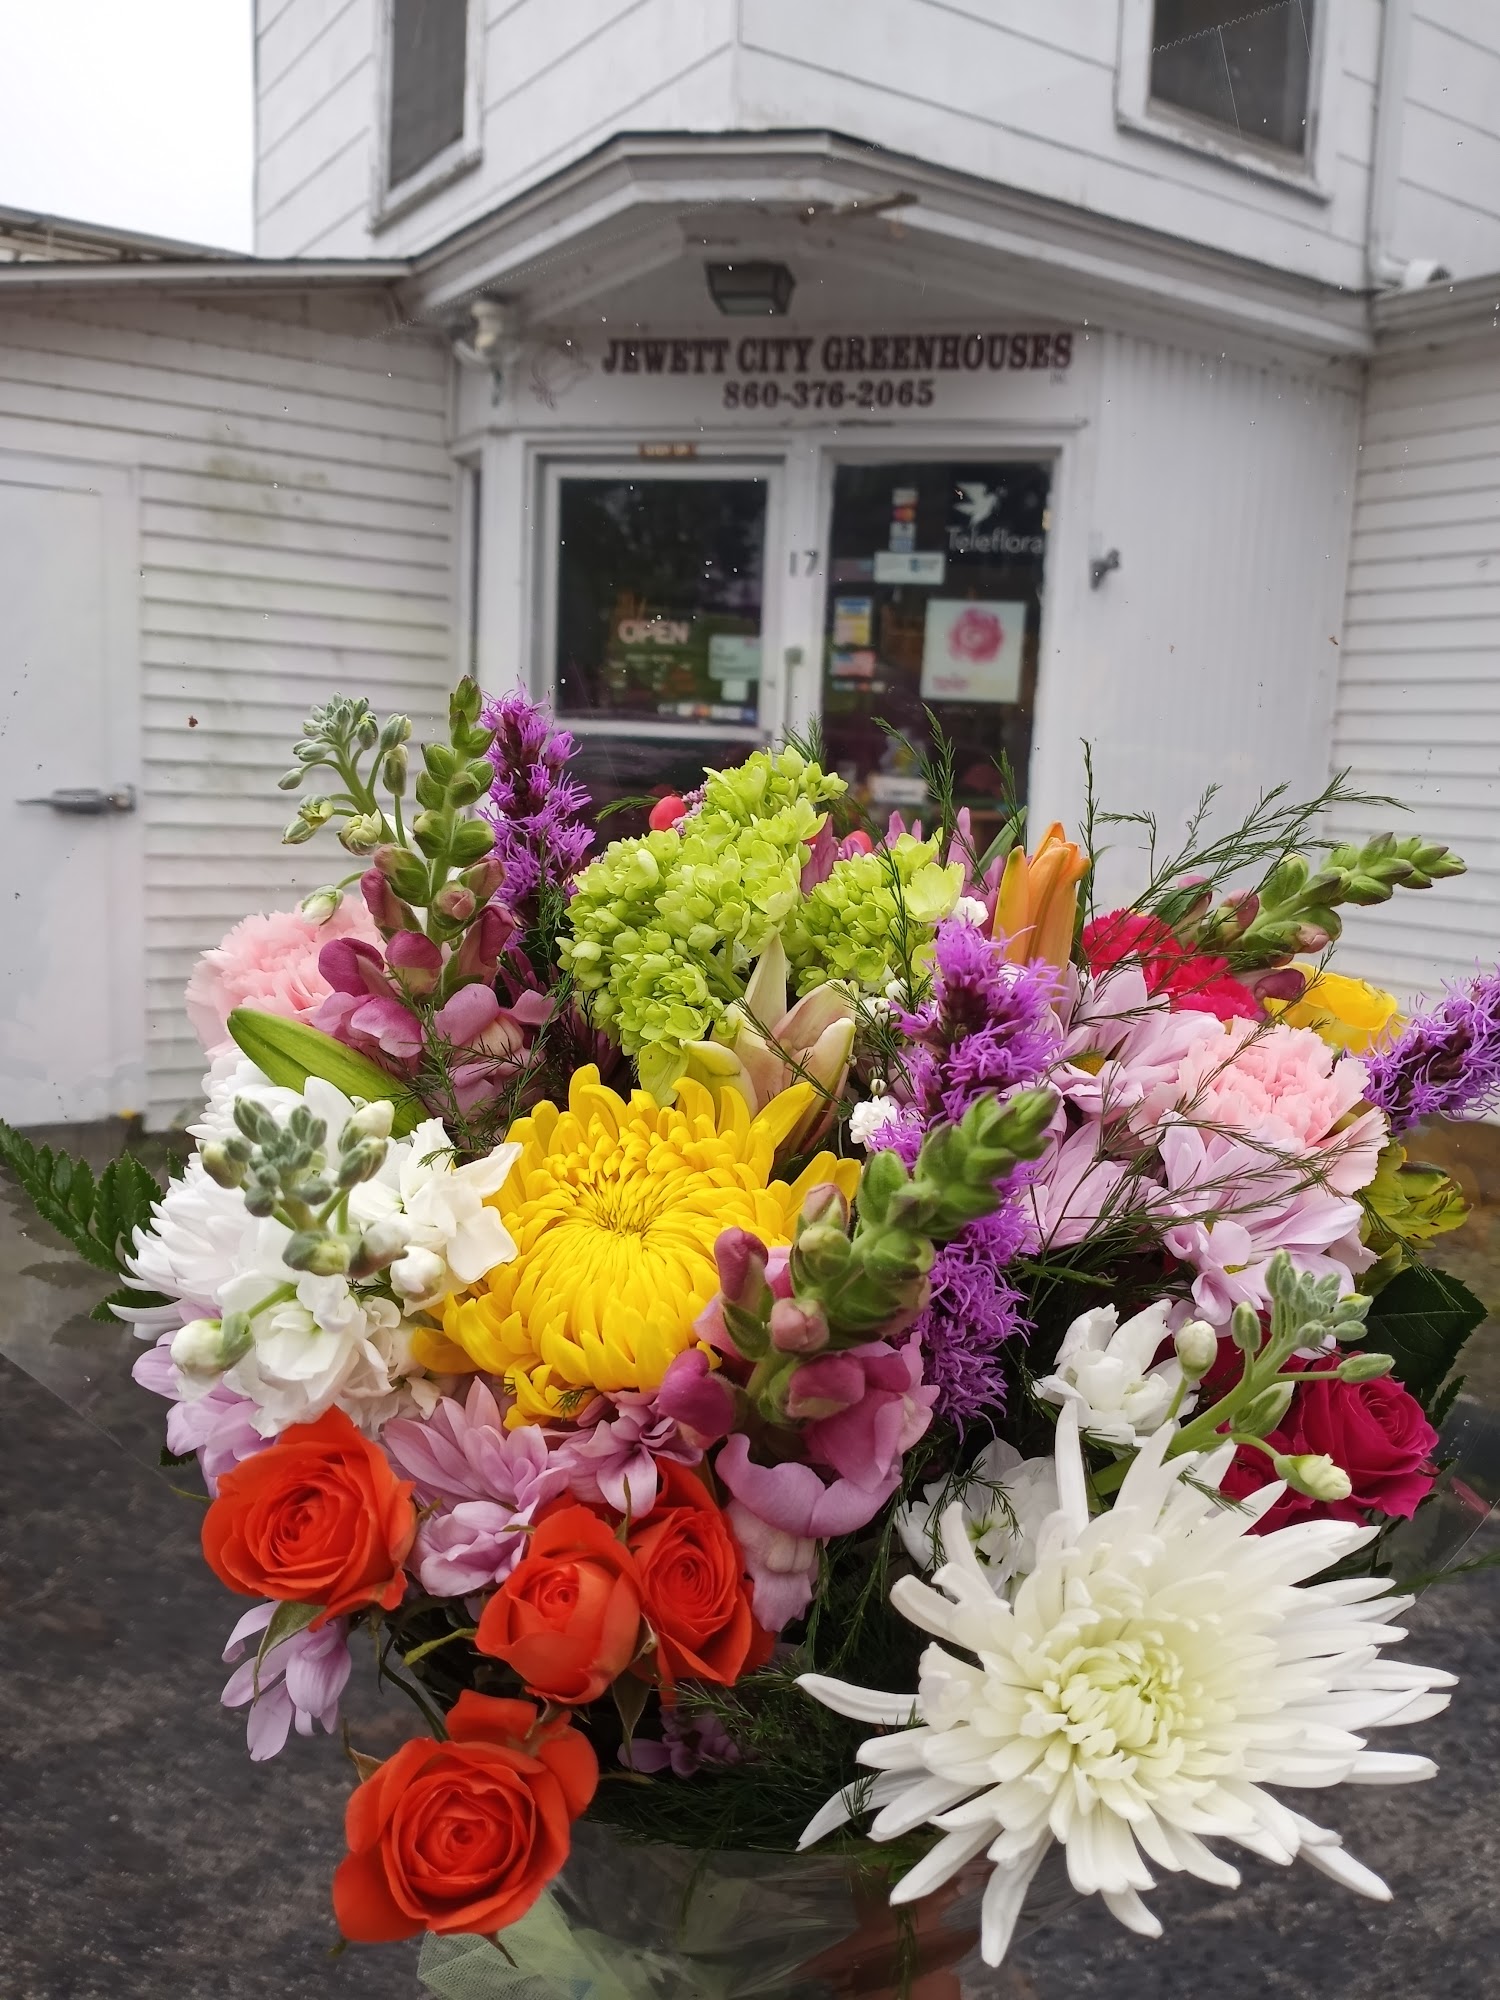 Jewett City Florist & Greenhouse 17 Ashland St, Jewett City Connecticut 06351